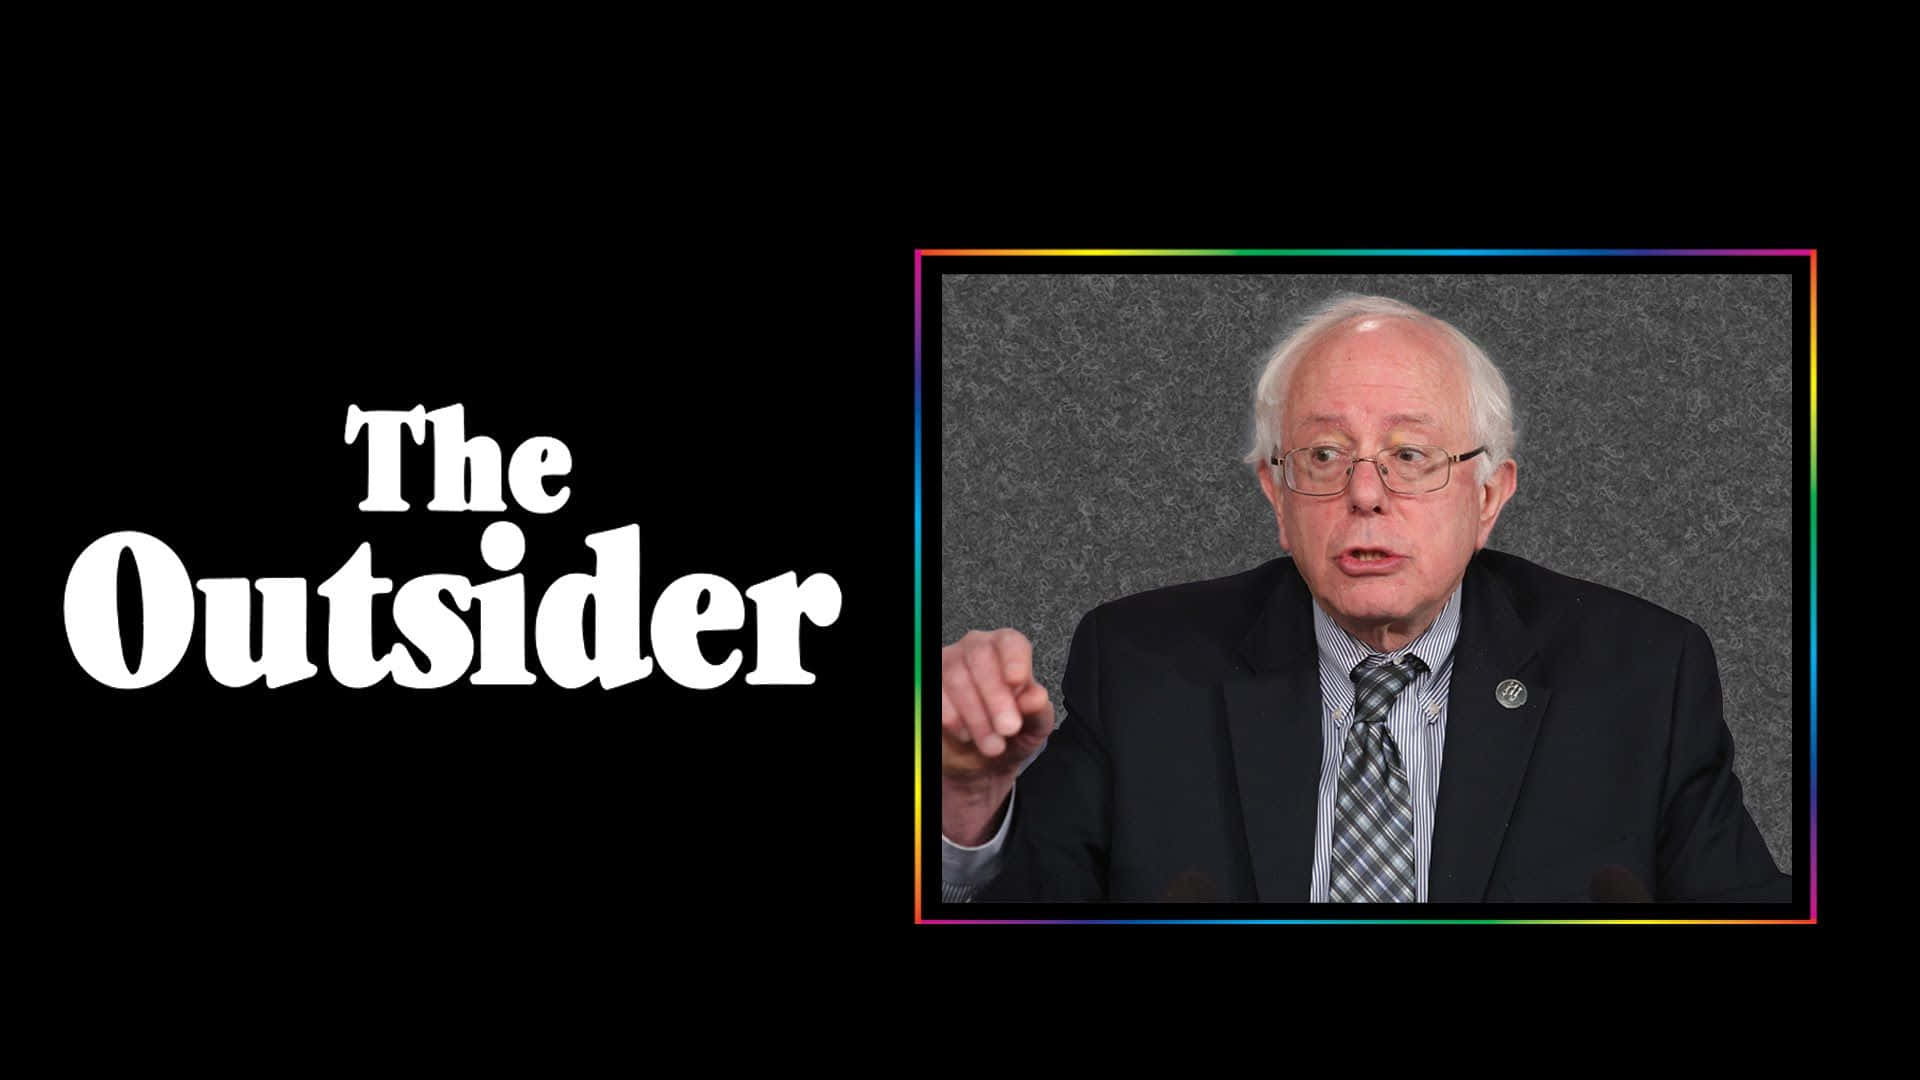 Bernie Sanders The Outsider Wallpaper